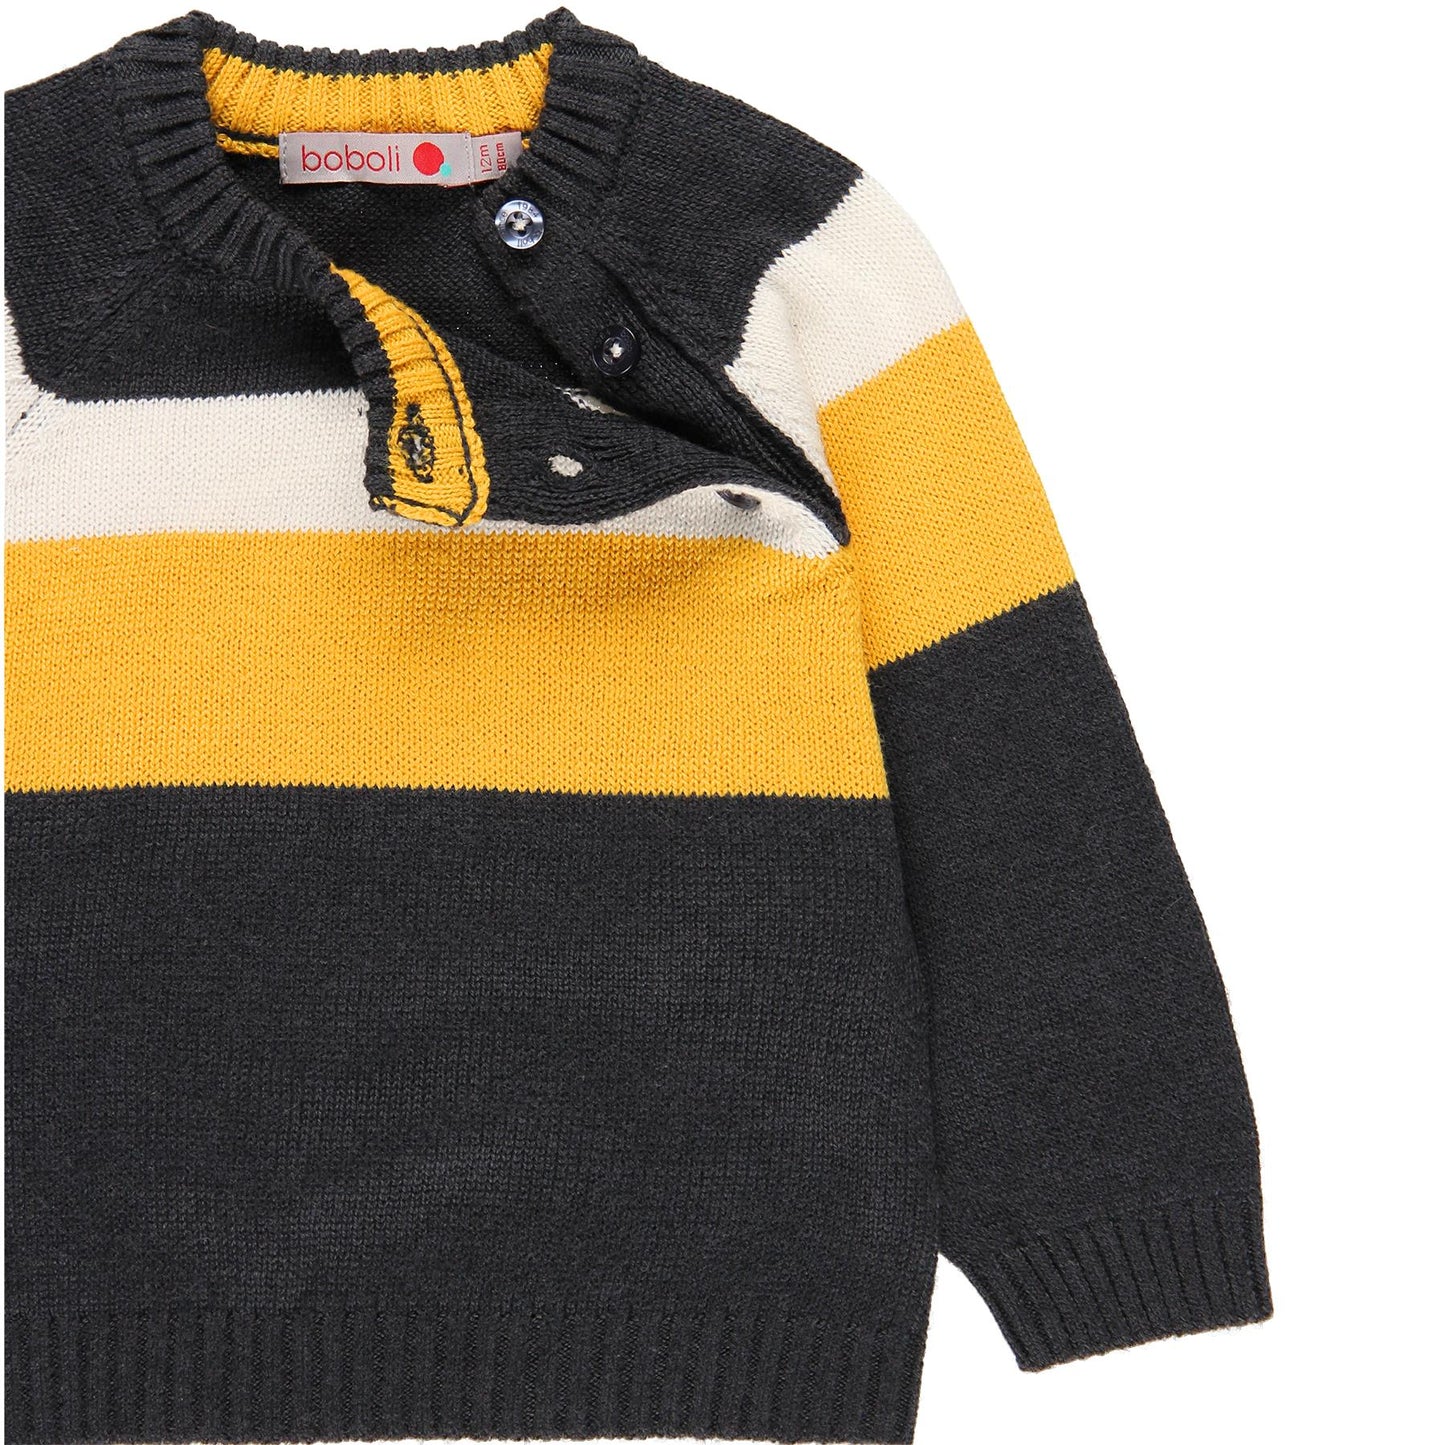 Sweater Tejido Boboli Gris-Amarillo